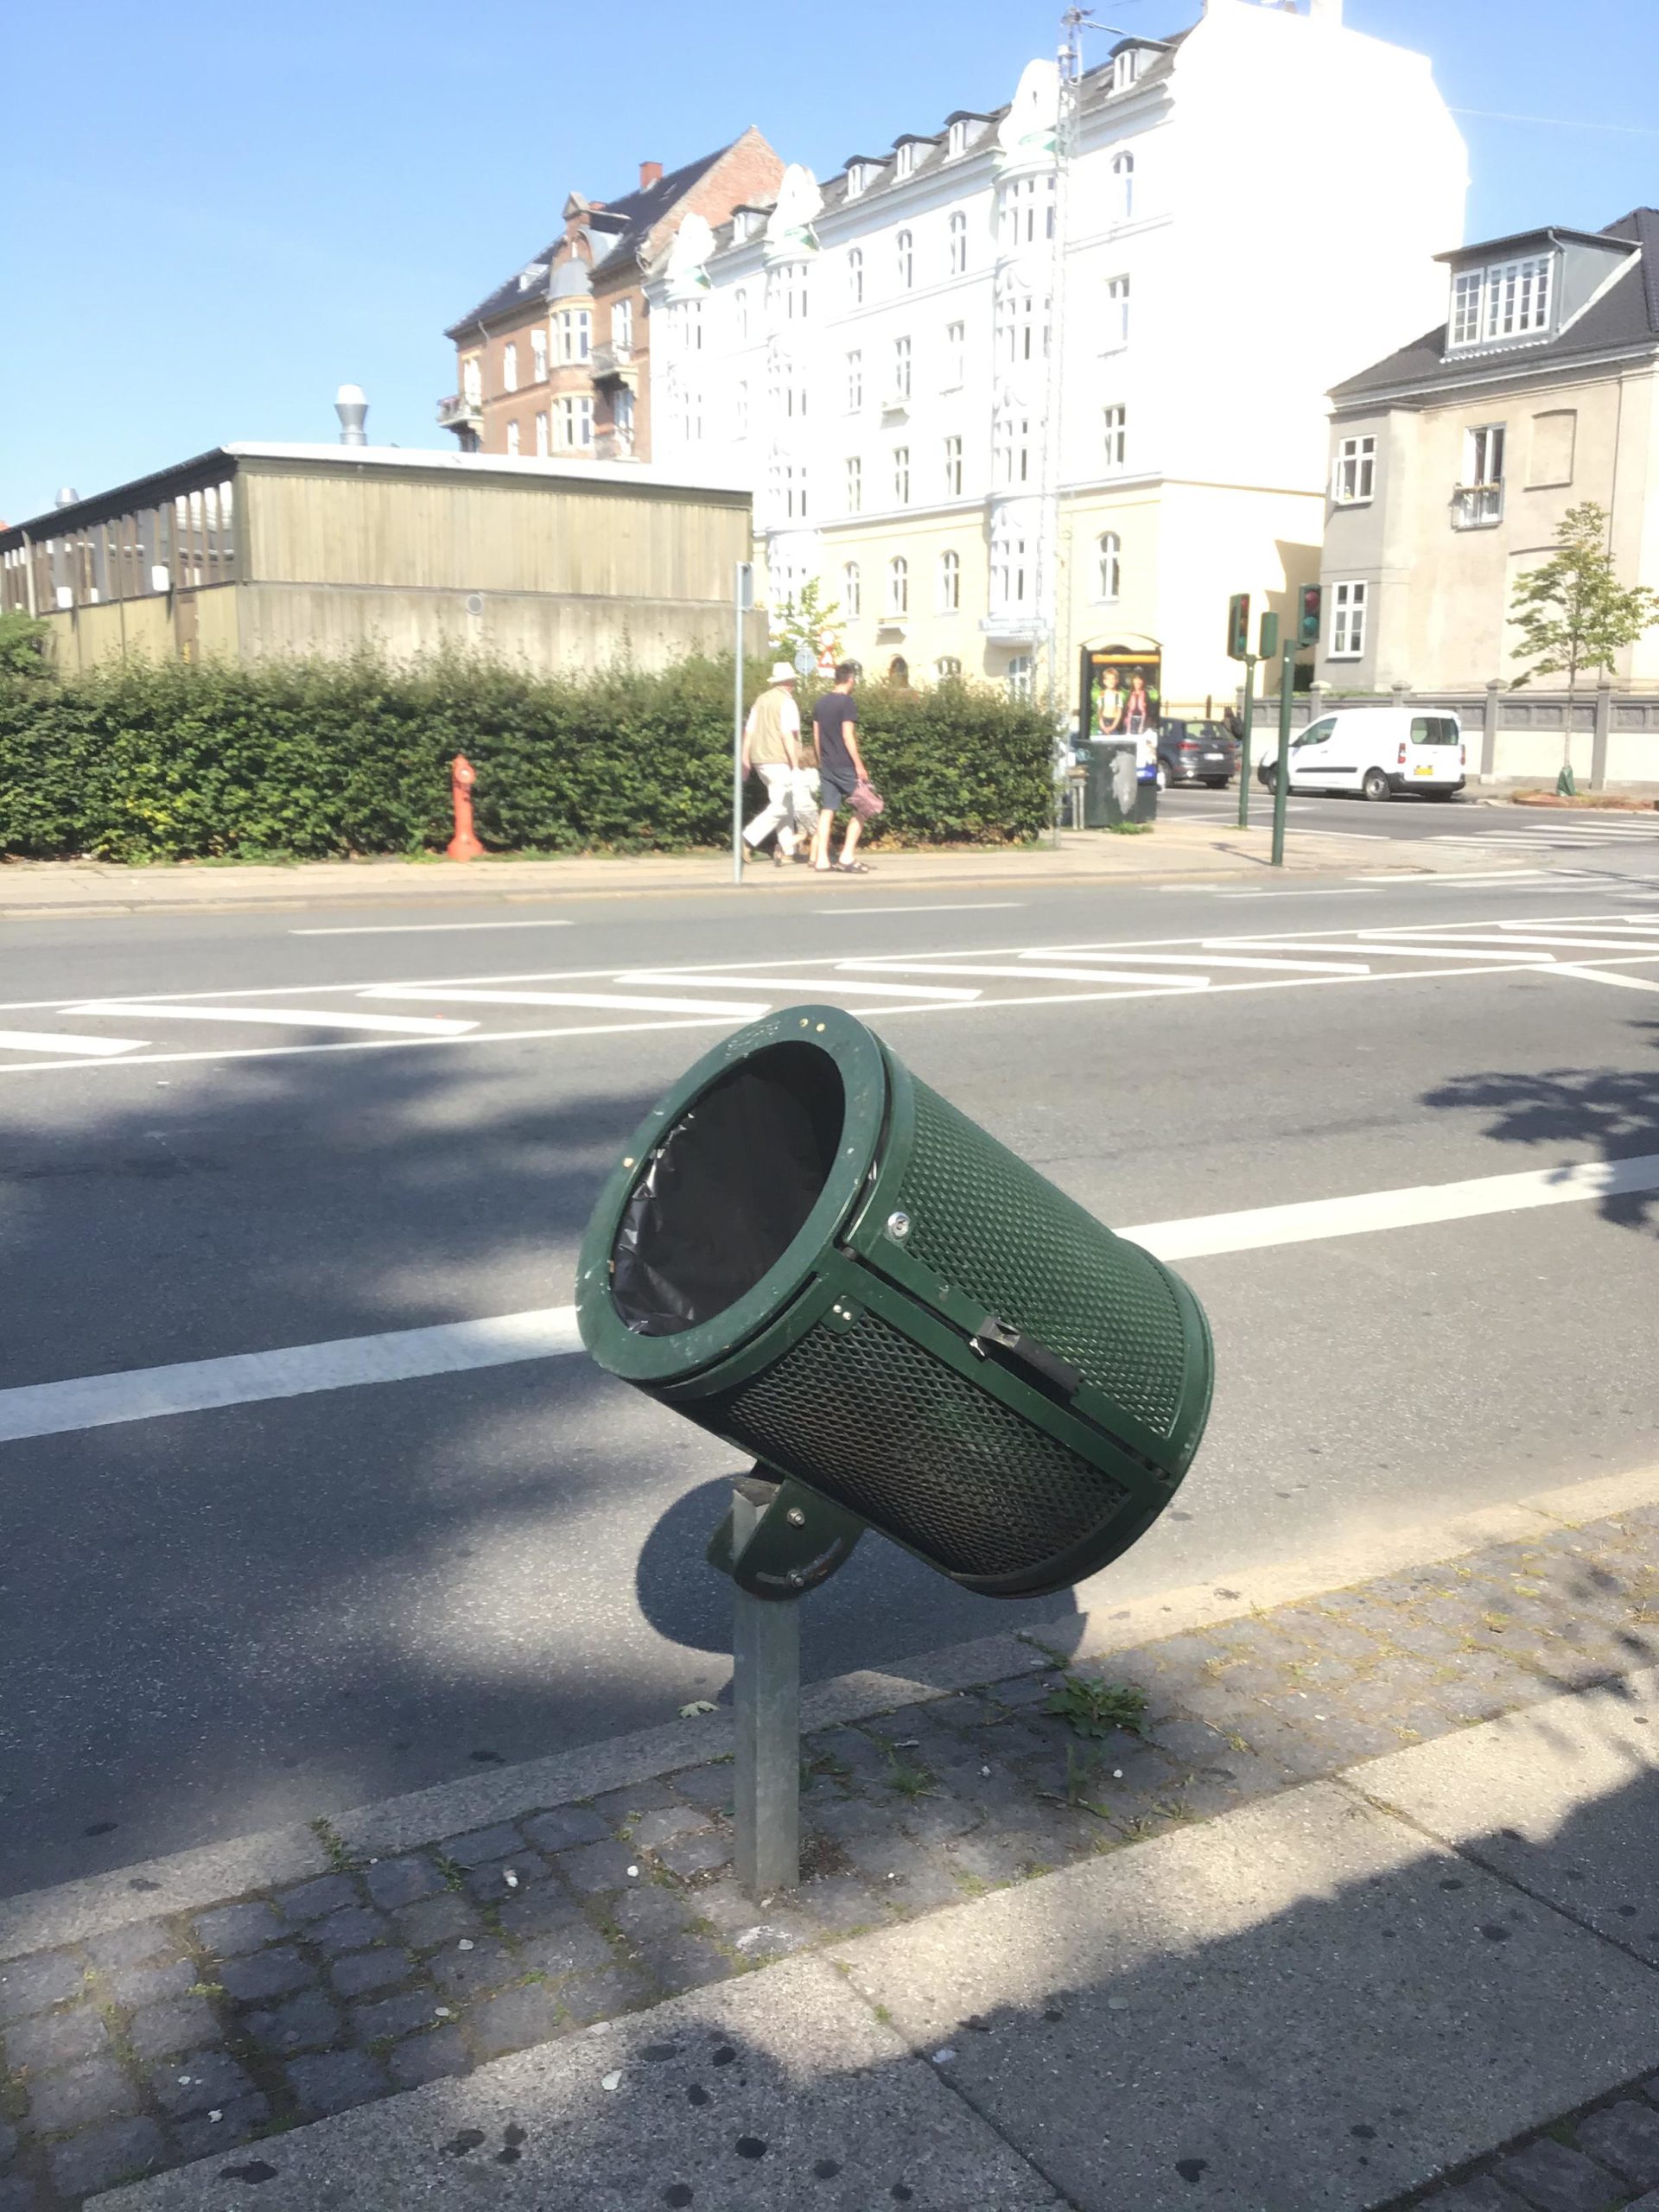 Copenhagen+has+angled+bins+so+cyclists+can+throw+away+trash+on+the+go.